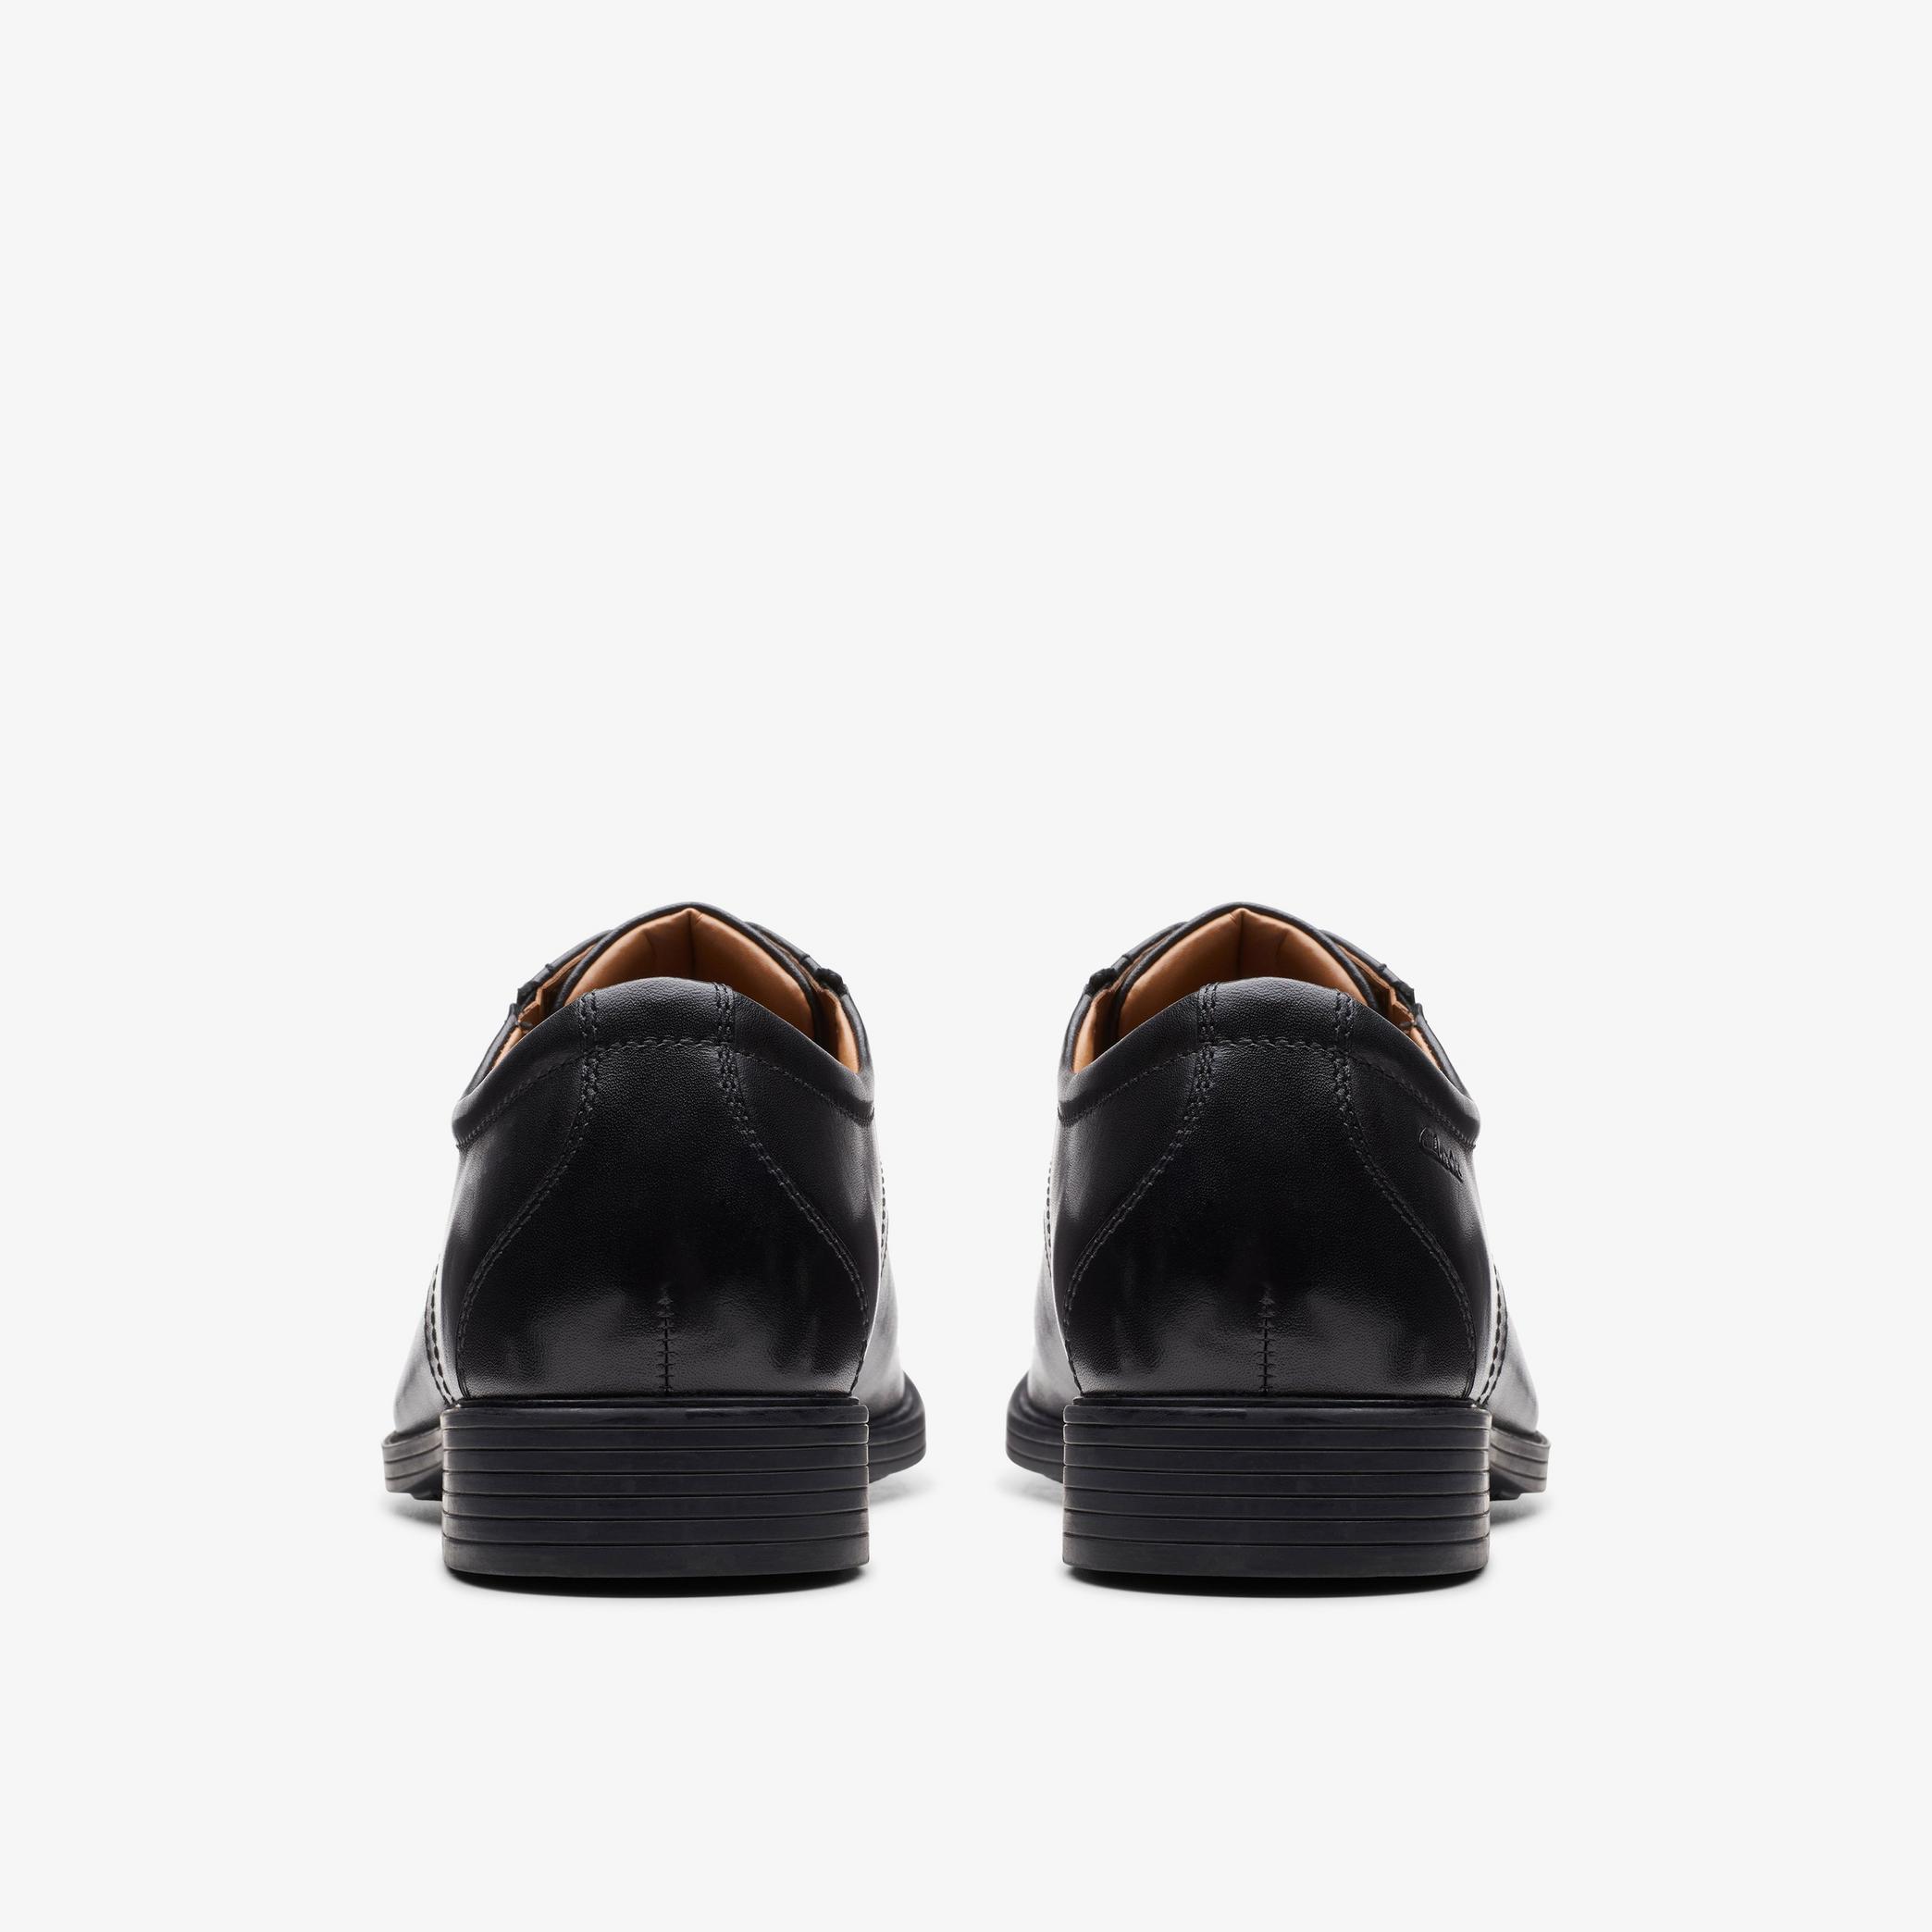 Chaussures Oxford en cuir noir Whiddon Cap, vue 5 de 6